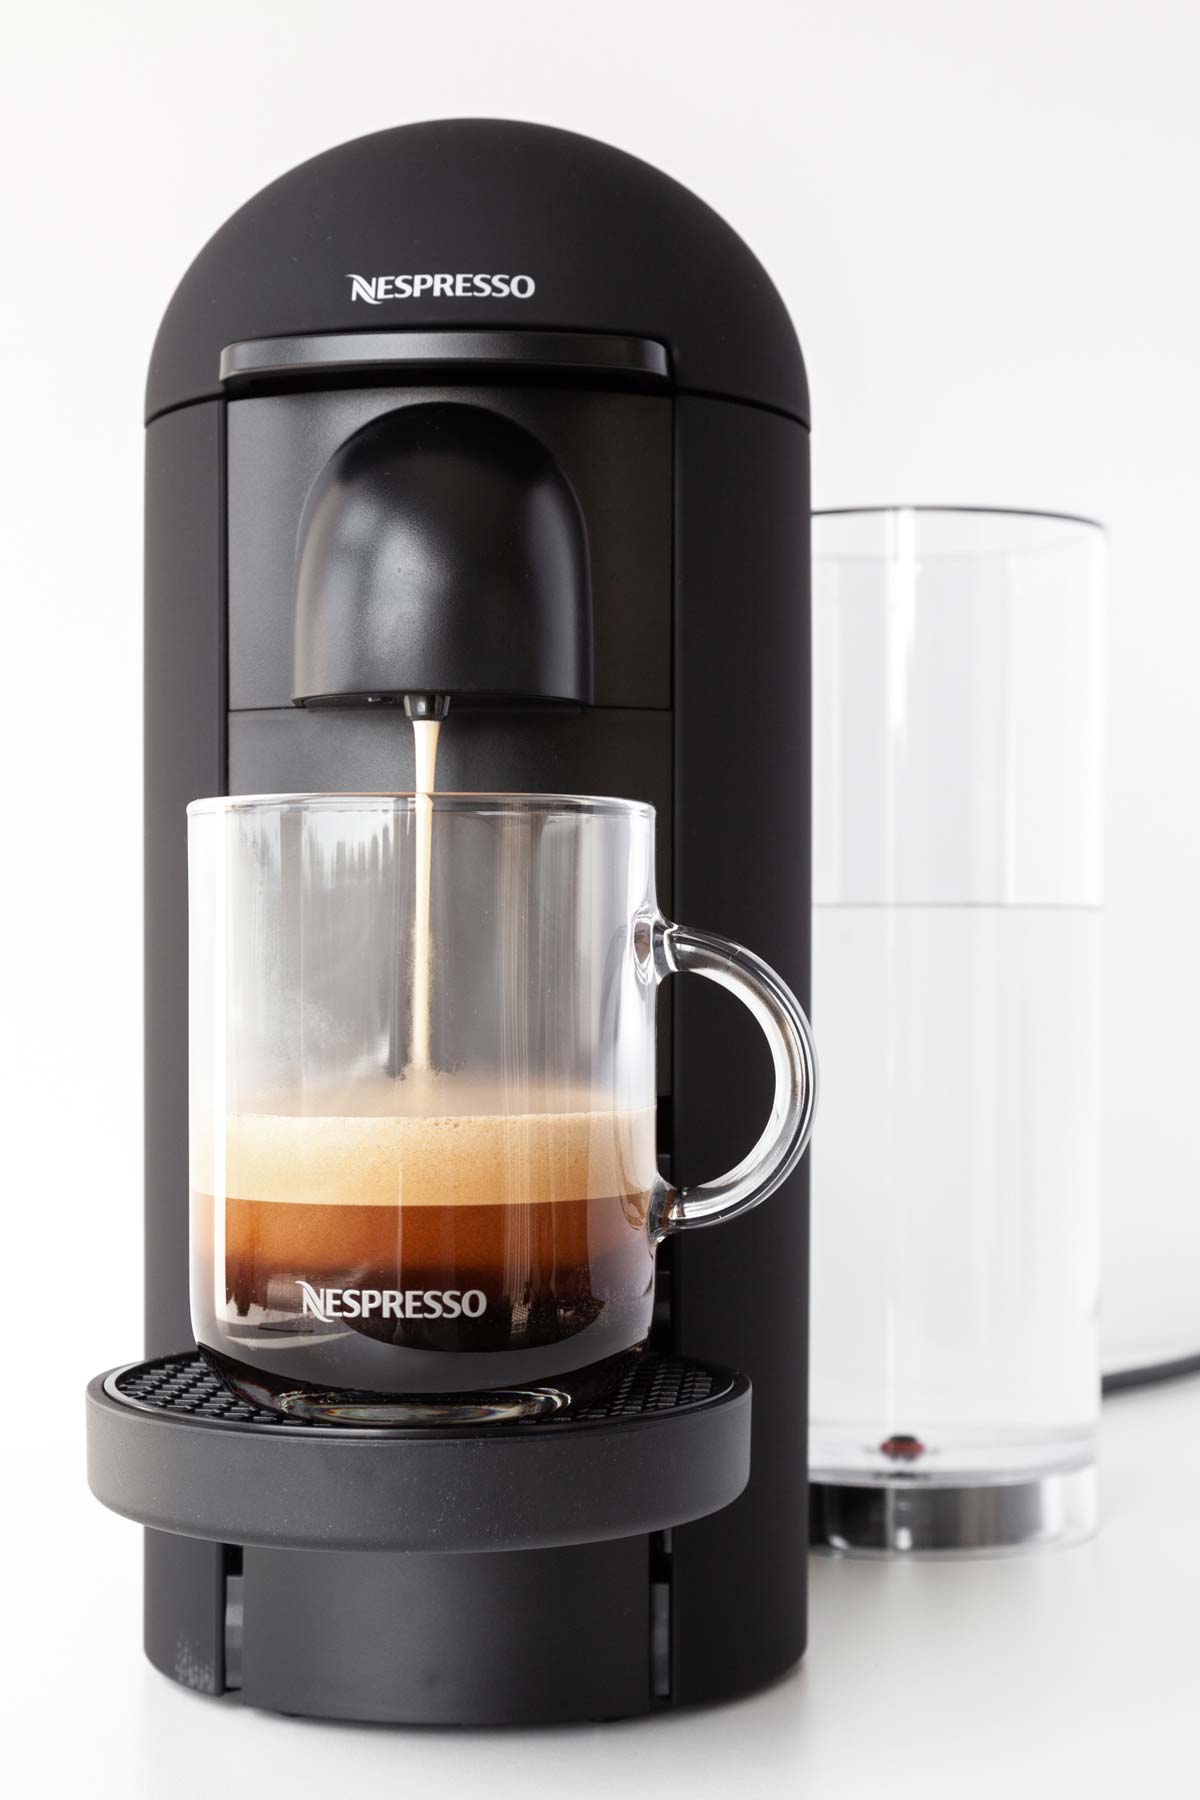 Nespresso VertuoPlus machine making coffee into a mug.